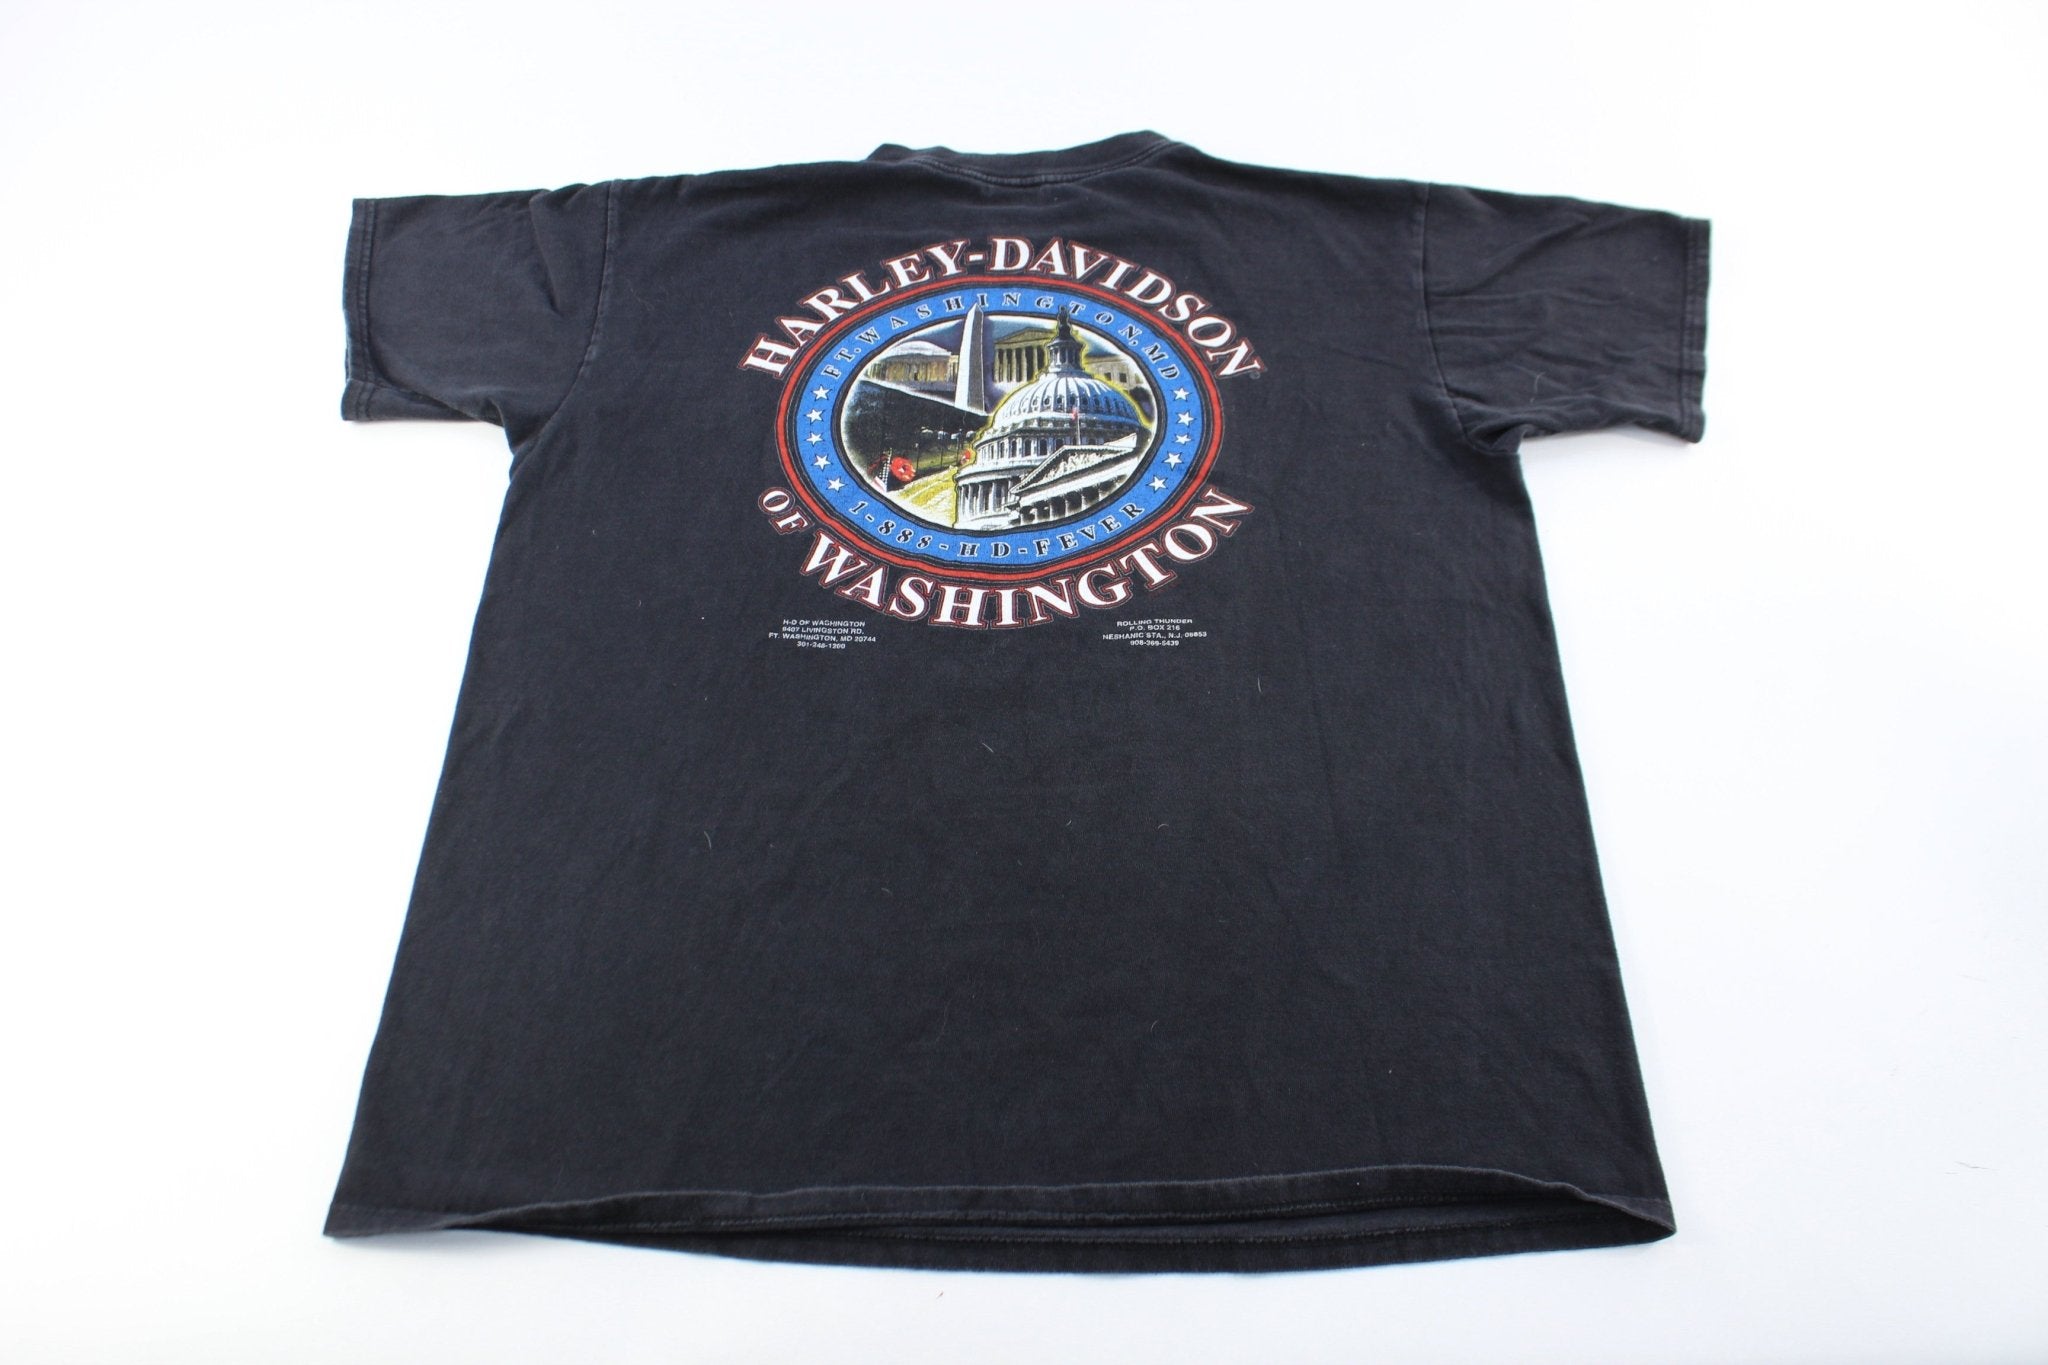 2000 Harley Davidson Motorcycles POW MIA Washington D.C. T-Shirt - ThriftedThreads.com